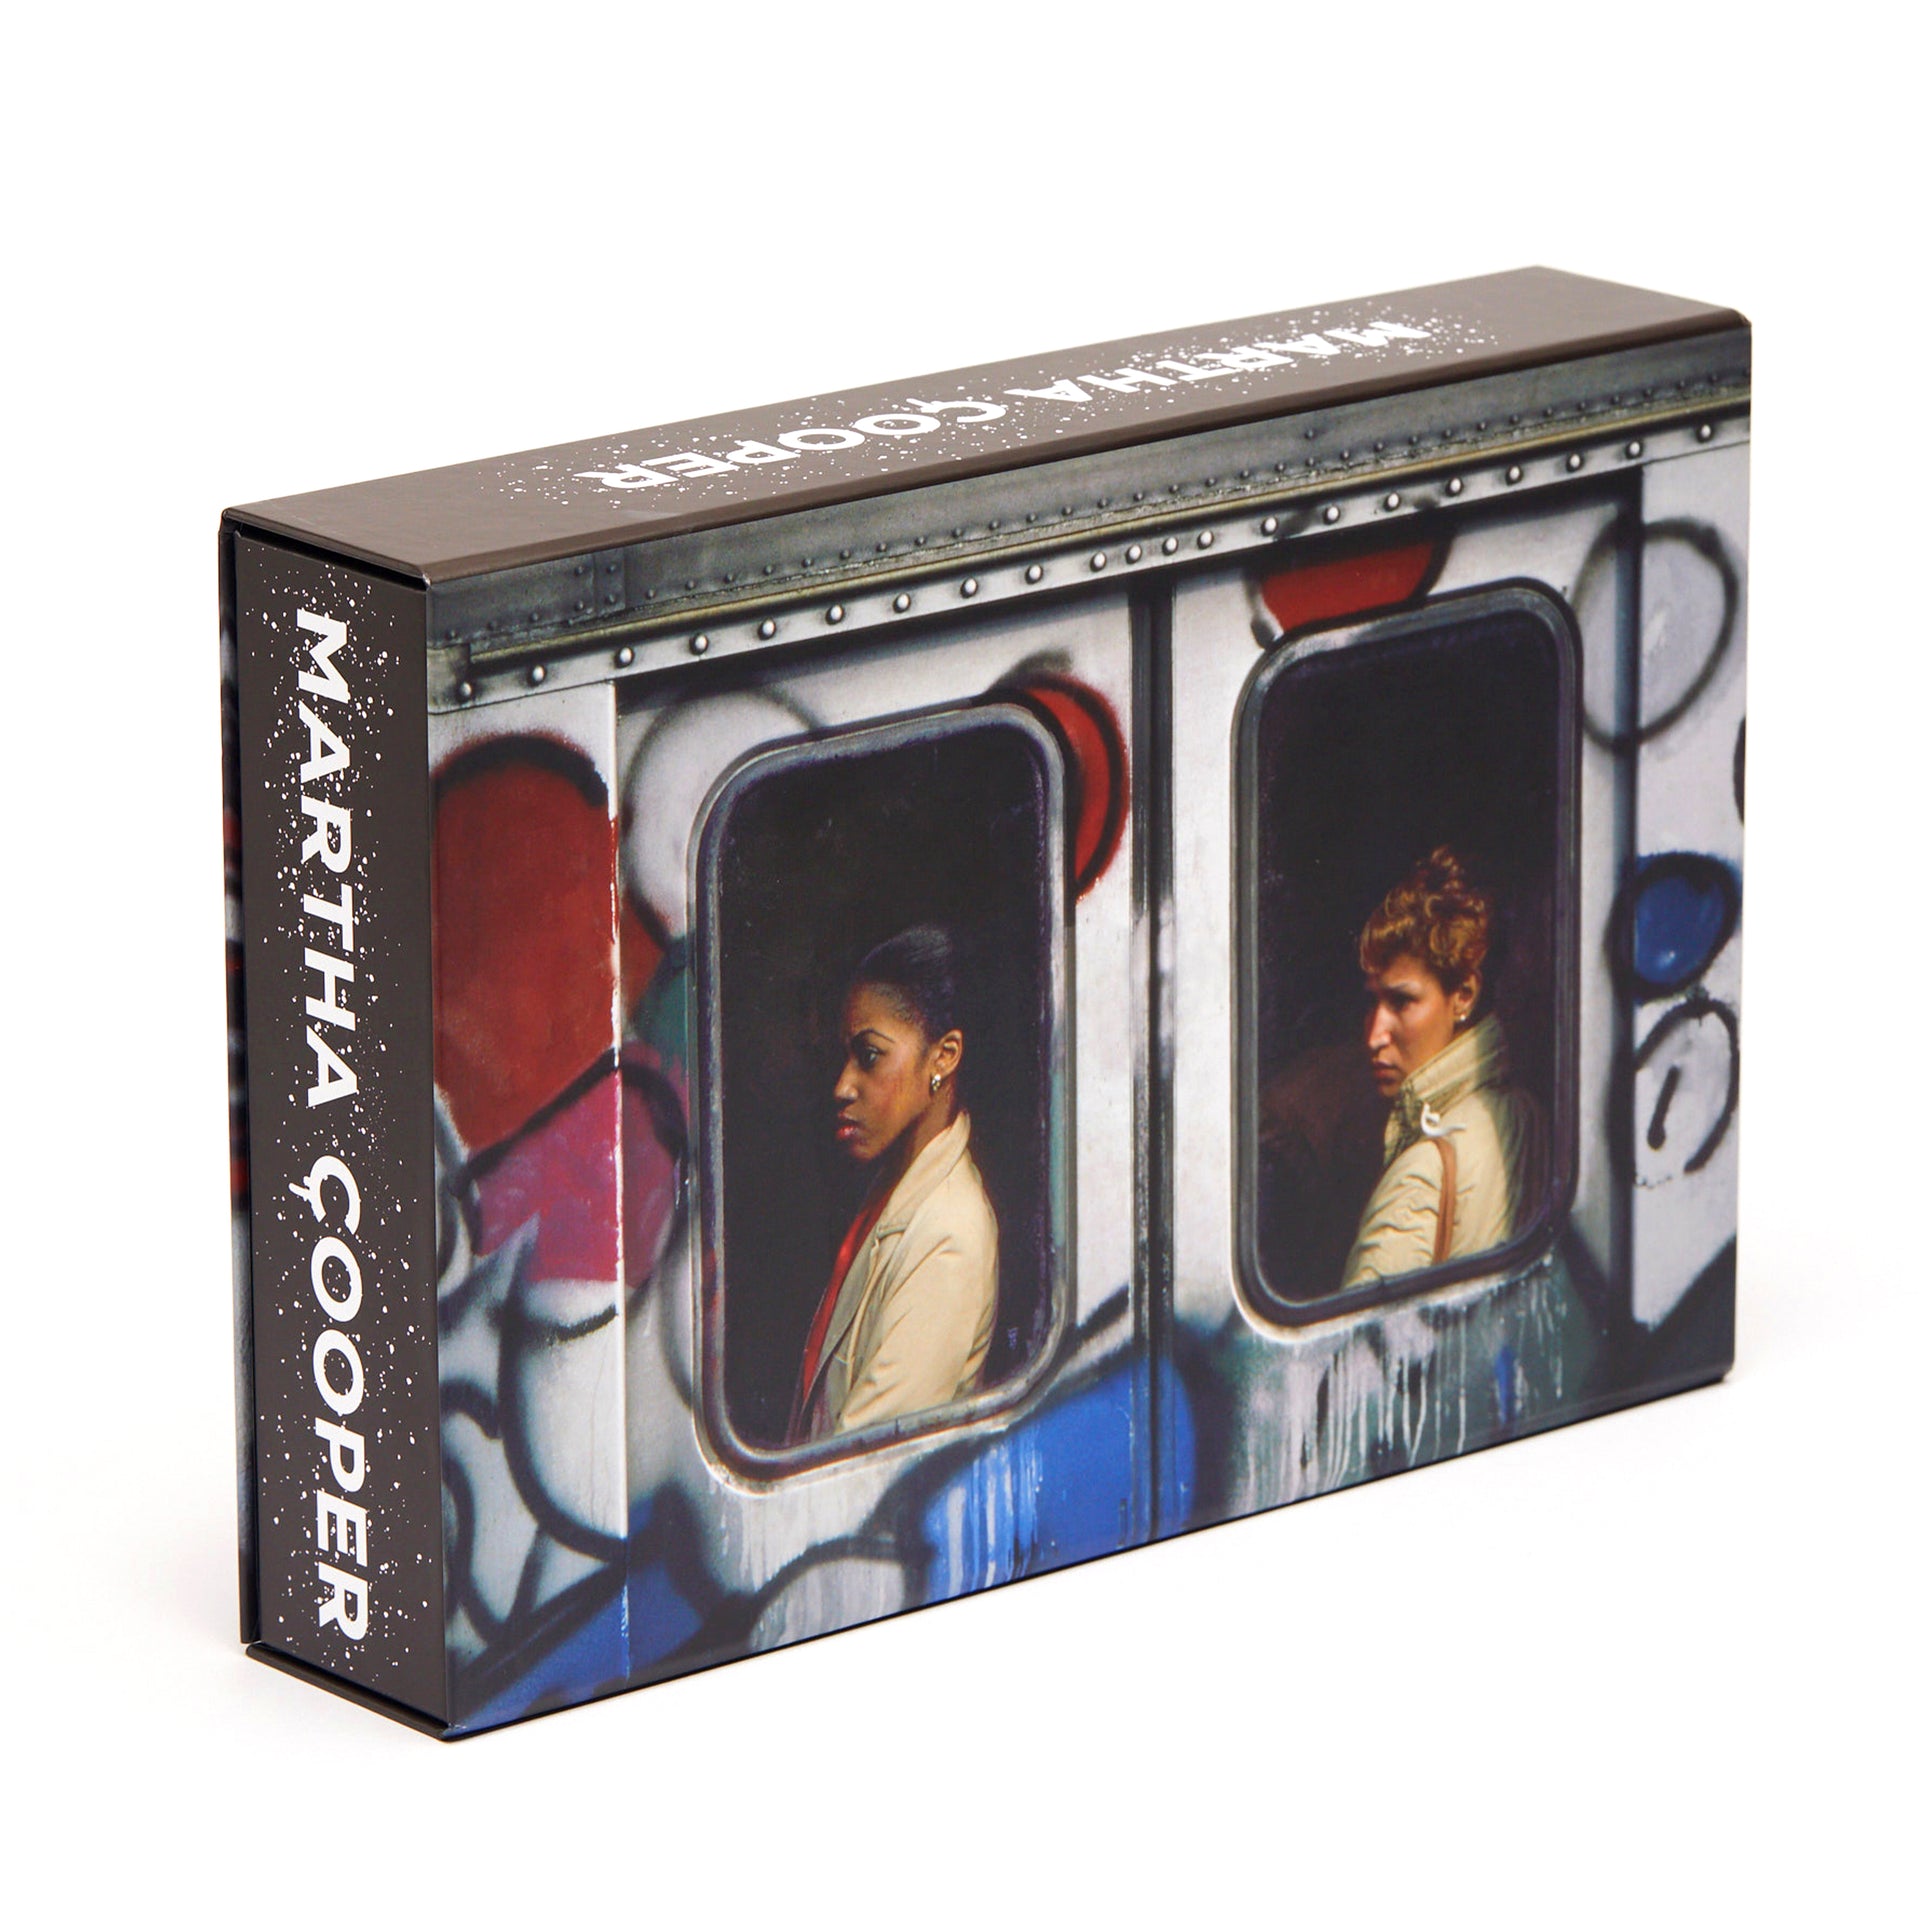 Martha Cooper Limited Edition "Spray Nation Box Set"